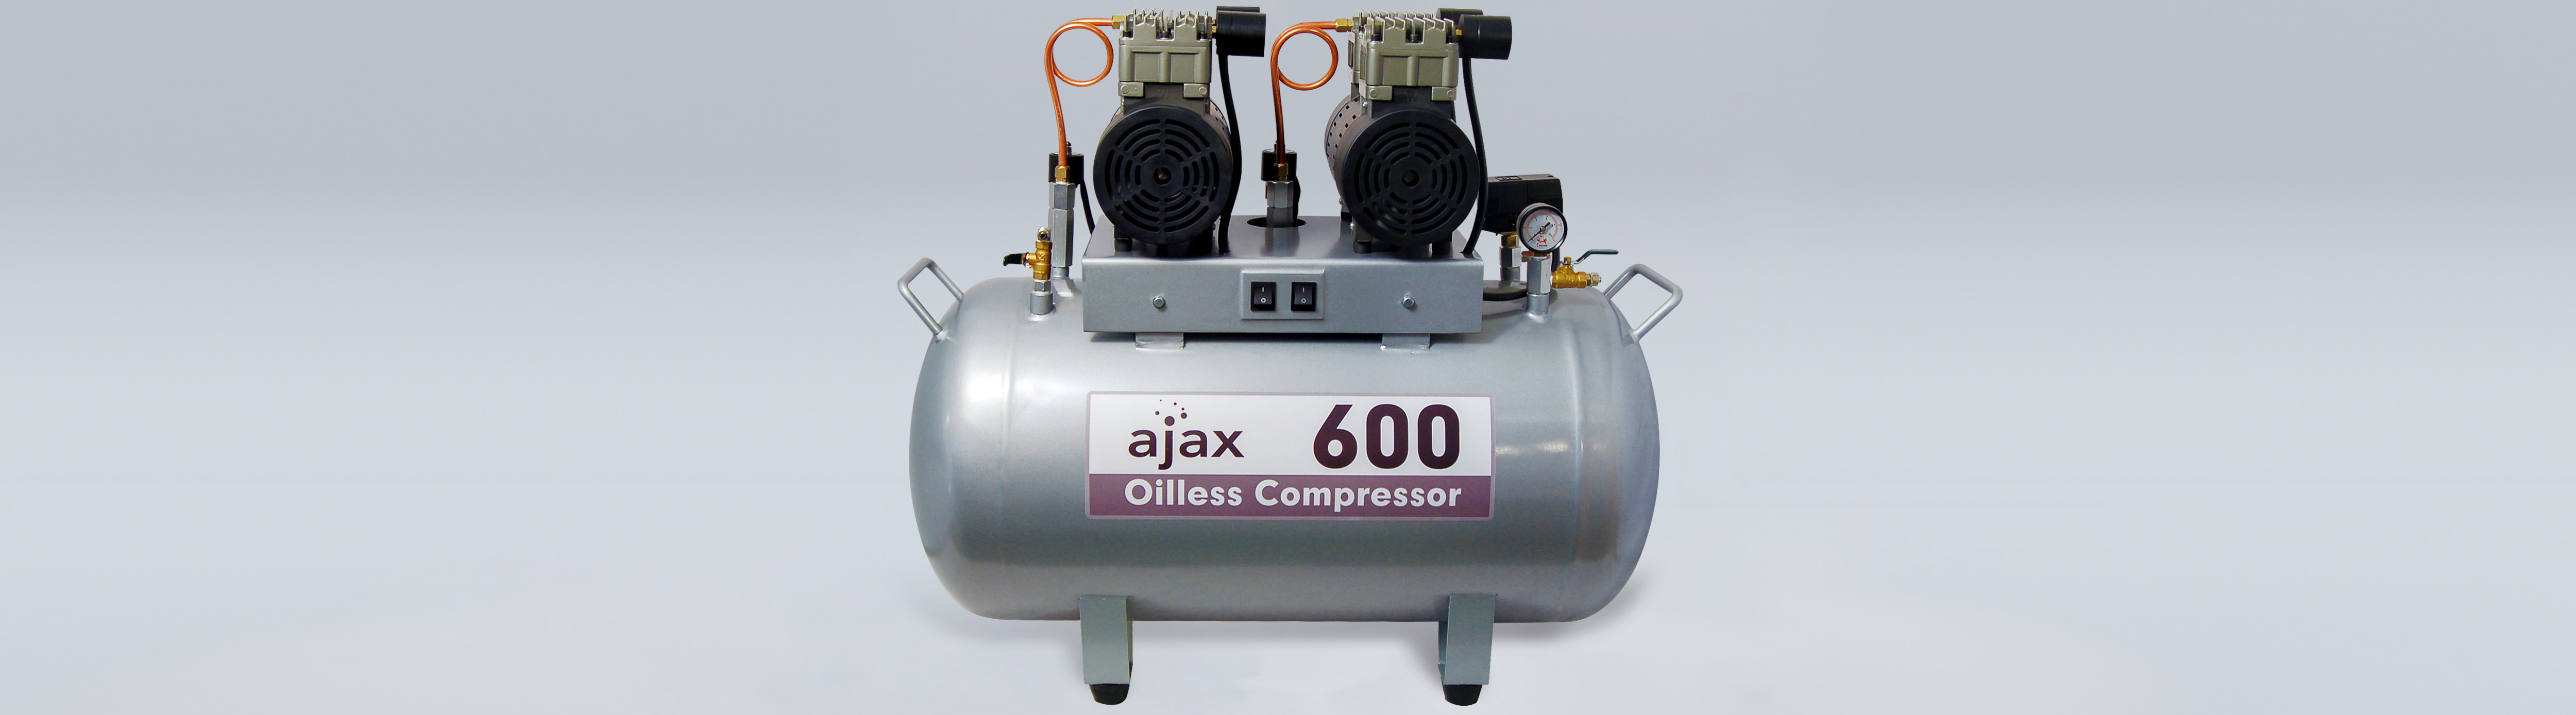 AJAX 600 Luftkompressor